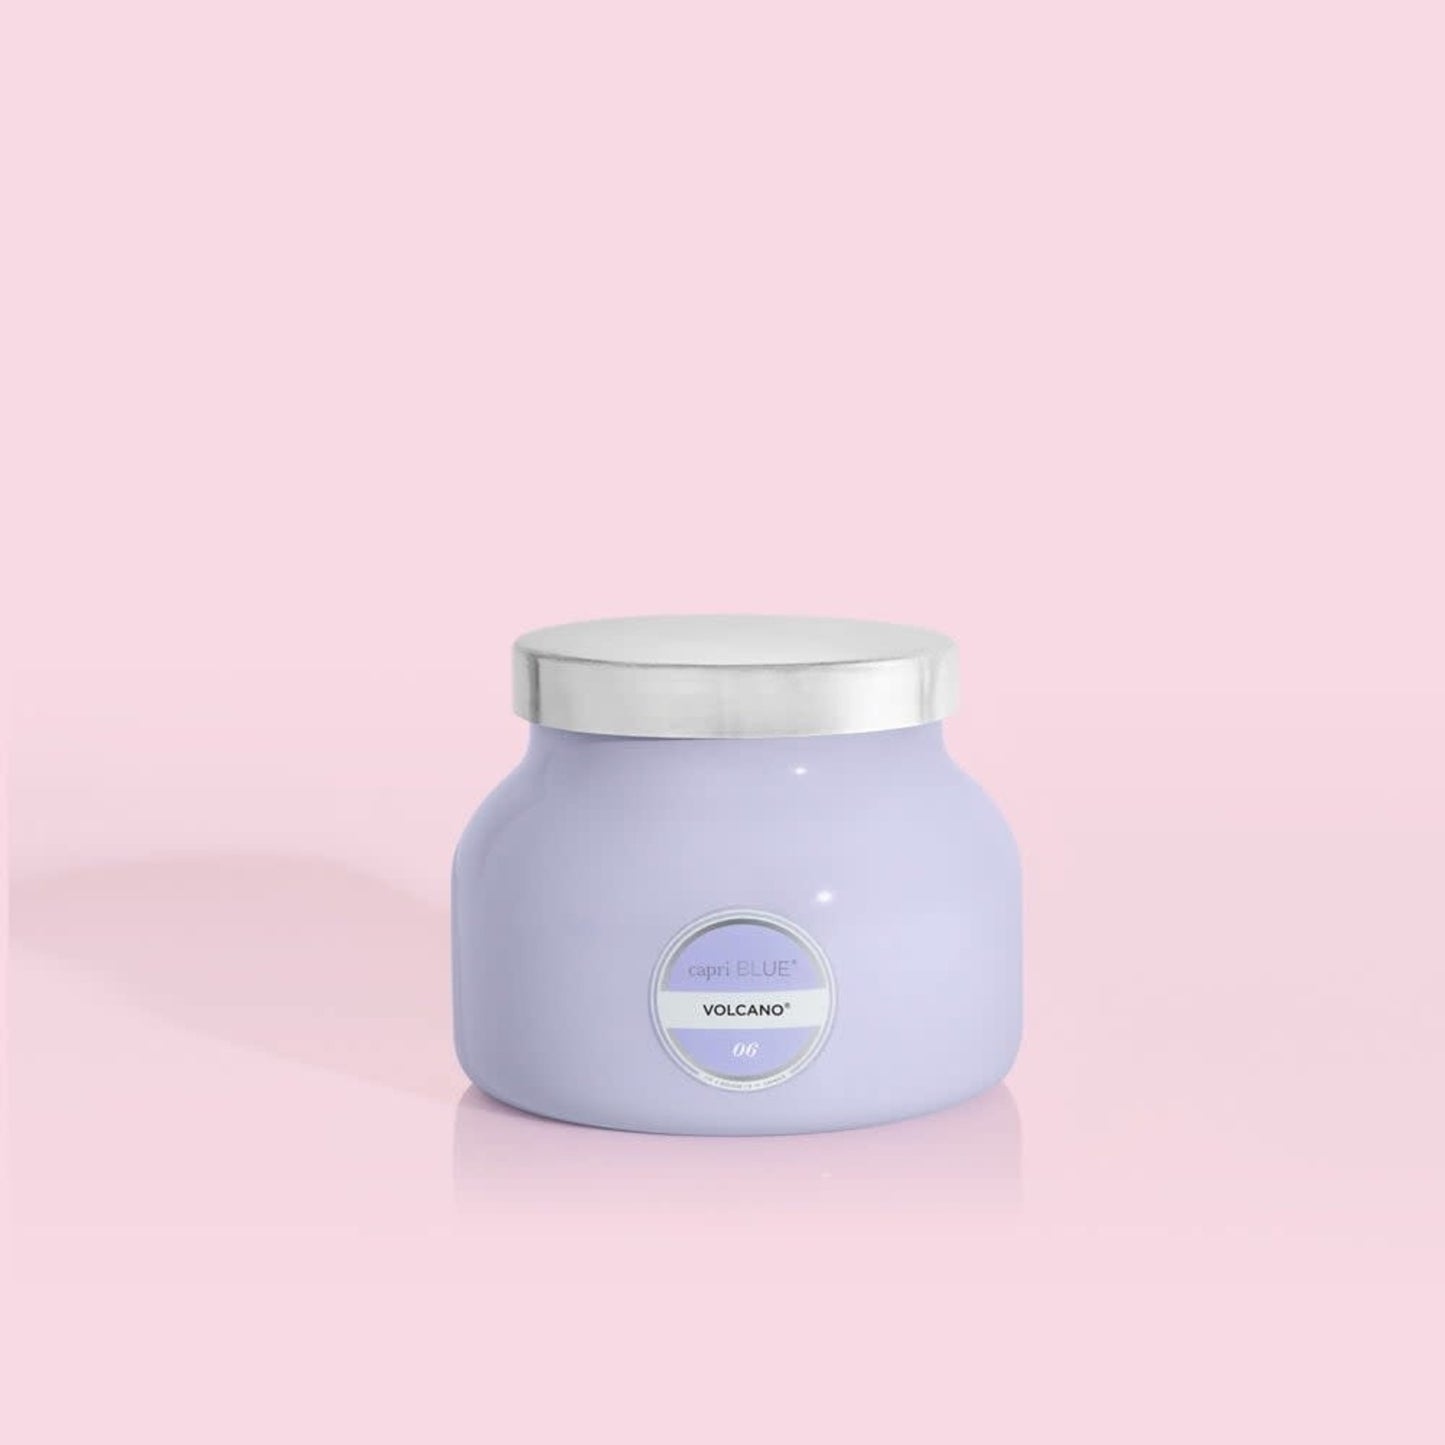 Volcano Digital Lavender Petite Jar - 8oz